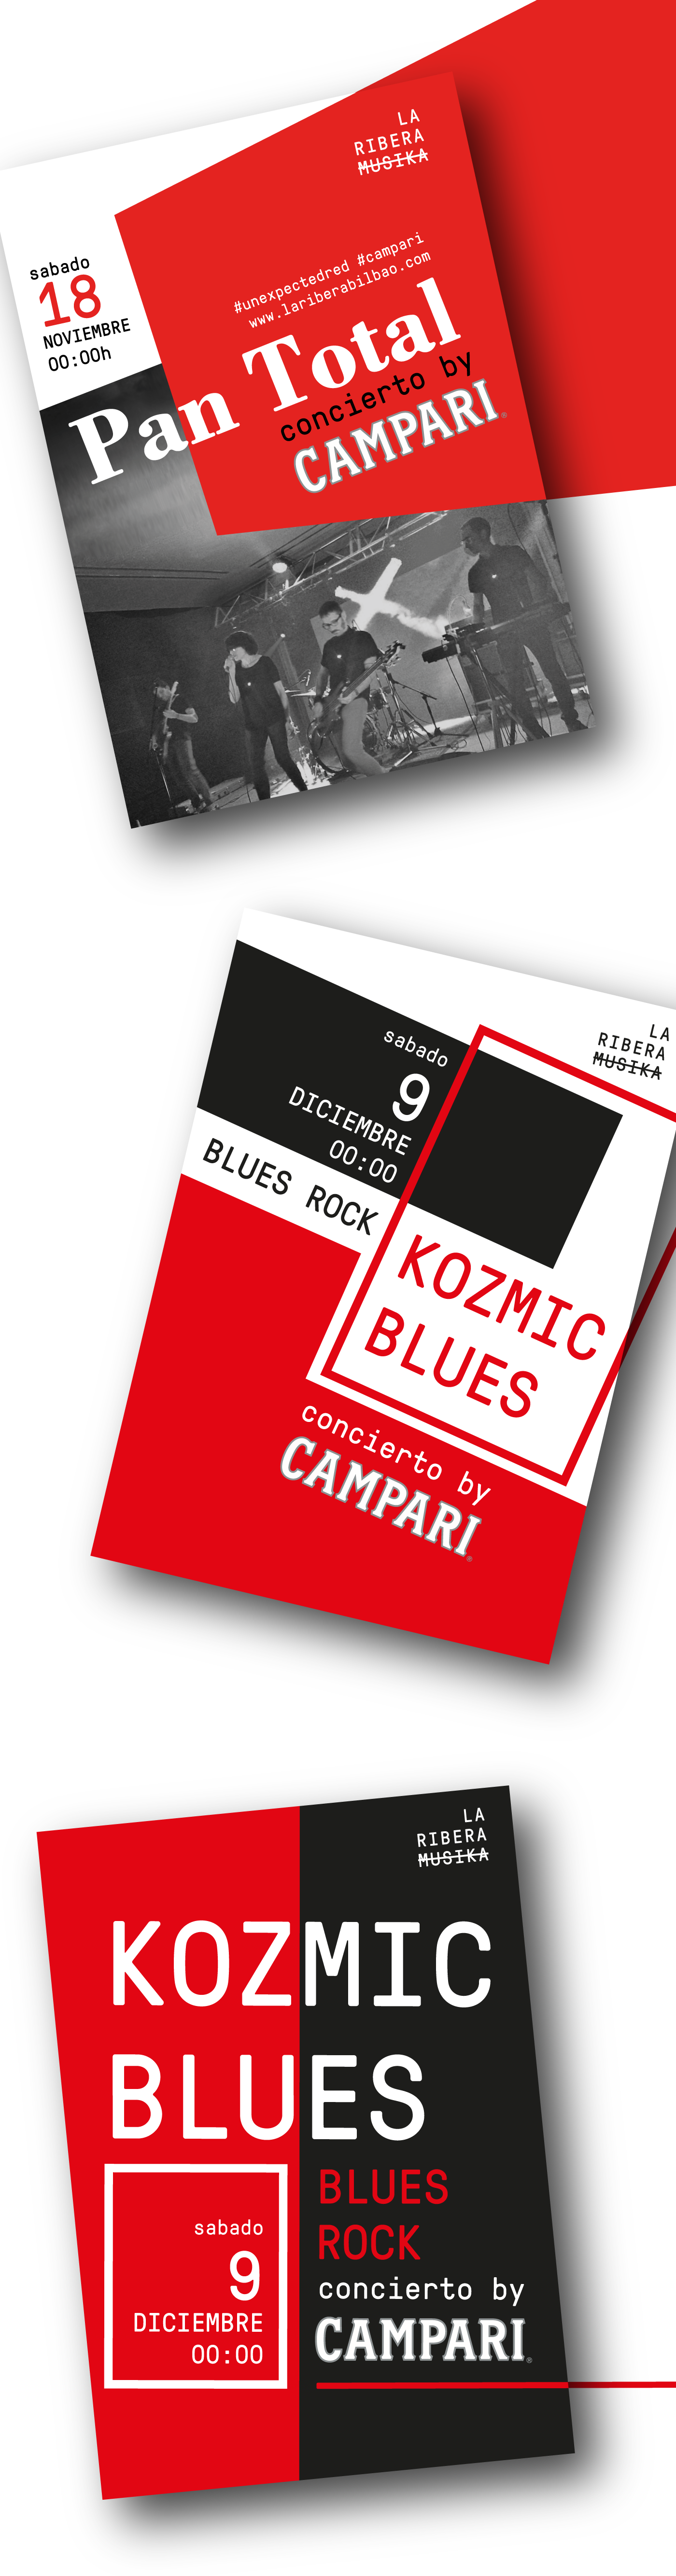 Campari La Ribera sukalmedia concert Pan Total Kozmik blues music concert